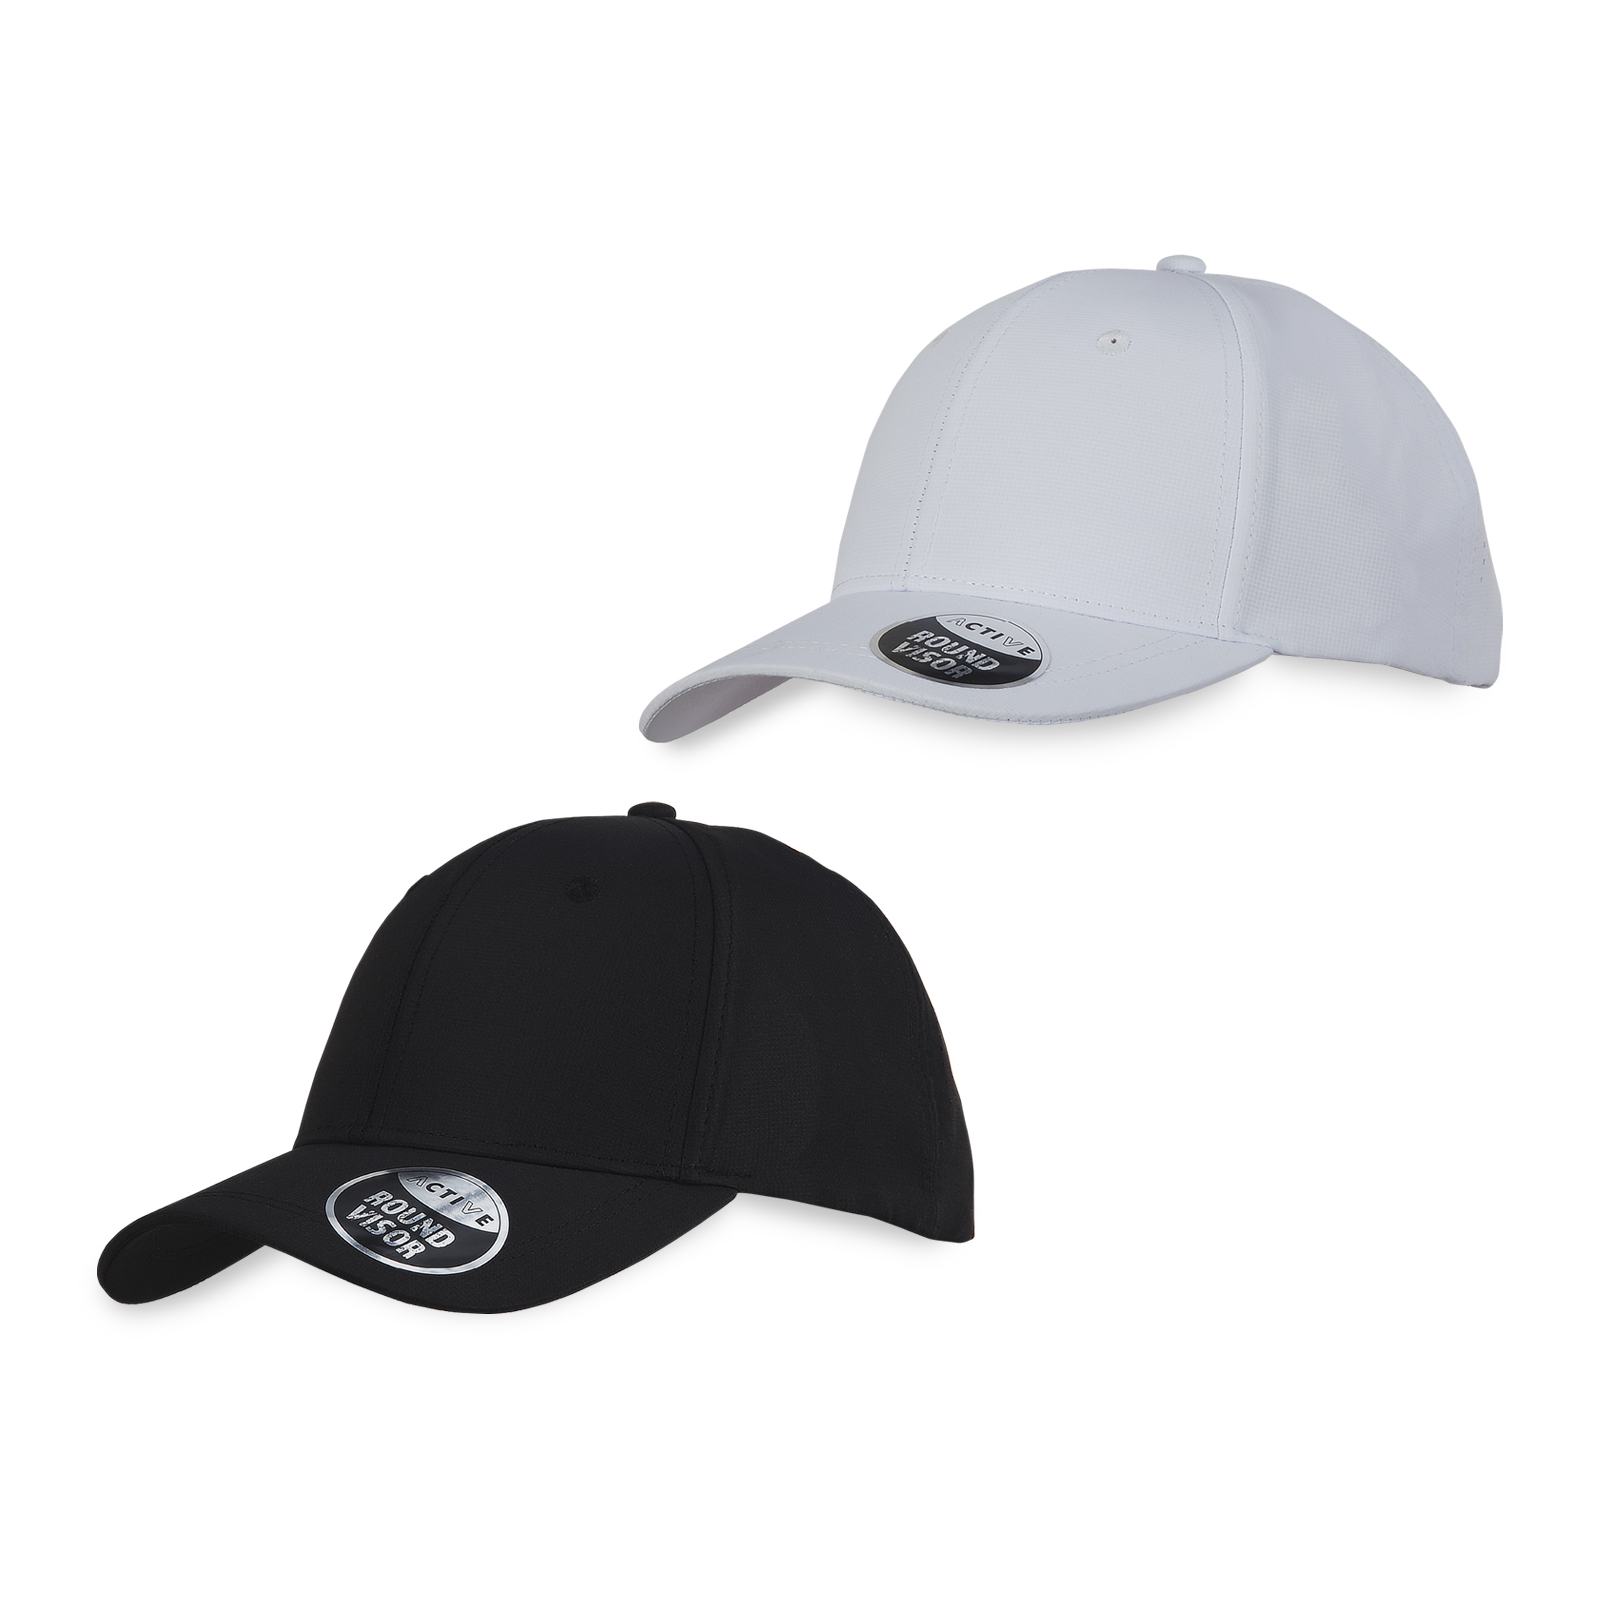 VENT 6 OPEN - כובע מצחיה מיוחד לפעילות ספורט.
בד: פוליאסטר.
פס הזעה: Cool-Max.
דגם: אבזם פלסטיק.
מספר חלקים: 6.
מצחיה: עגולה.
מידה: 58 ס”מ.